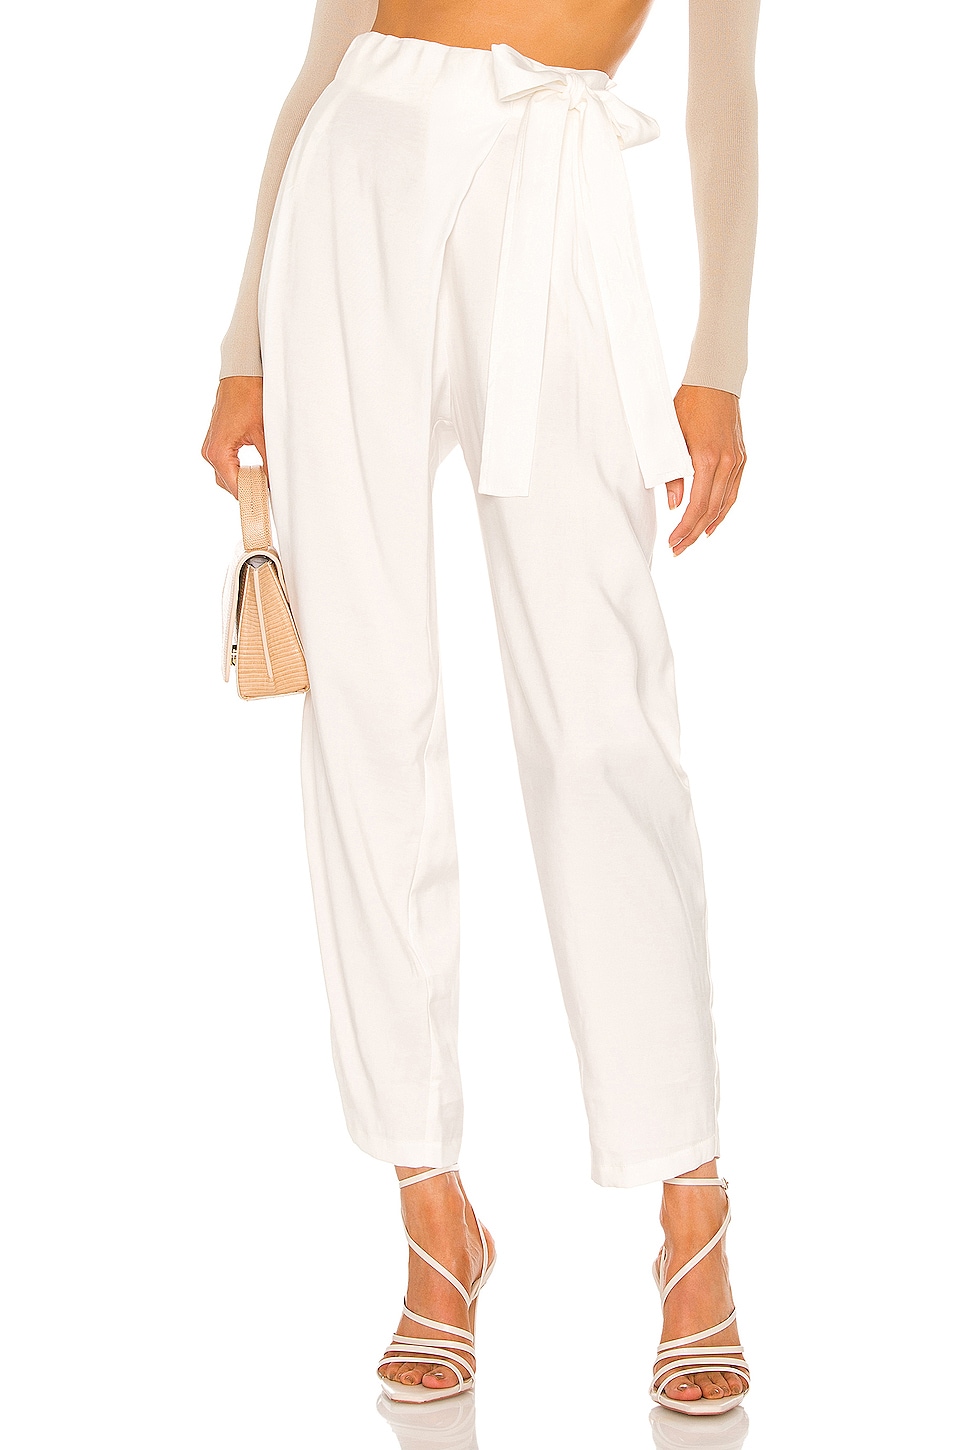 NONchalant Label Piper Trouser in Of White | REVOLVE